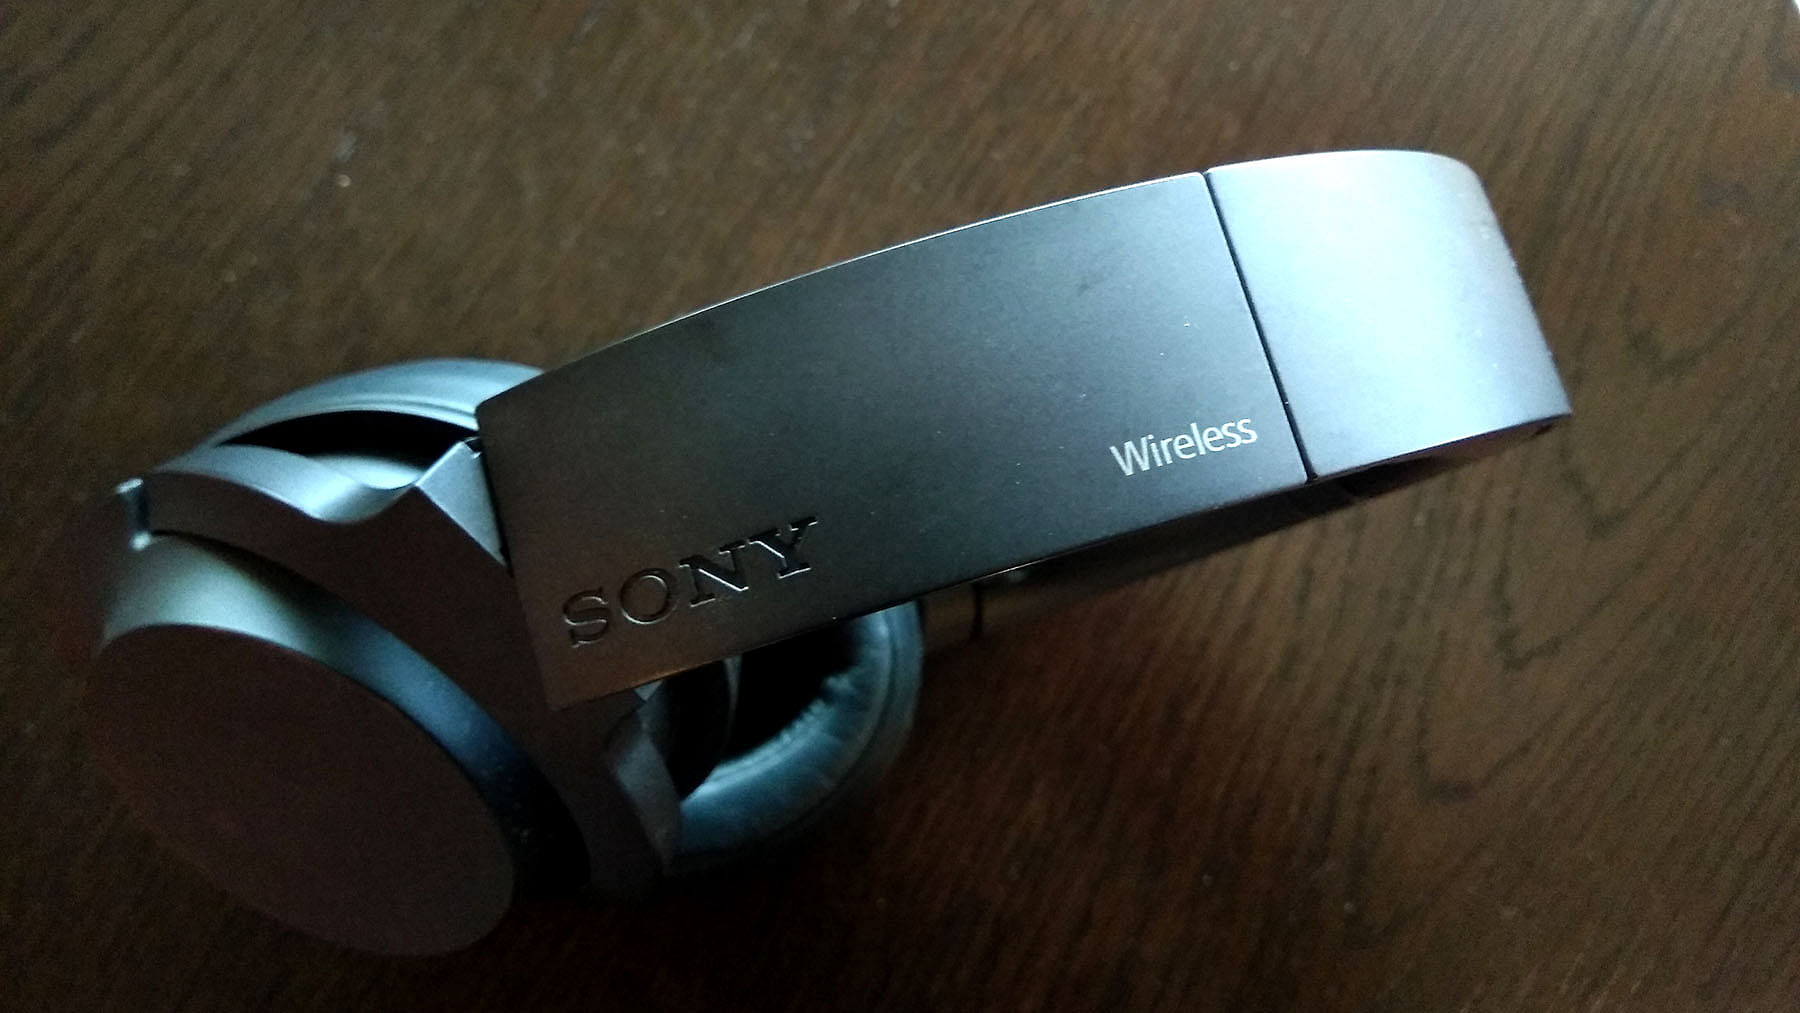 Sony h.ear wireless headphones. (Photo: <b>The Quint</b>)